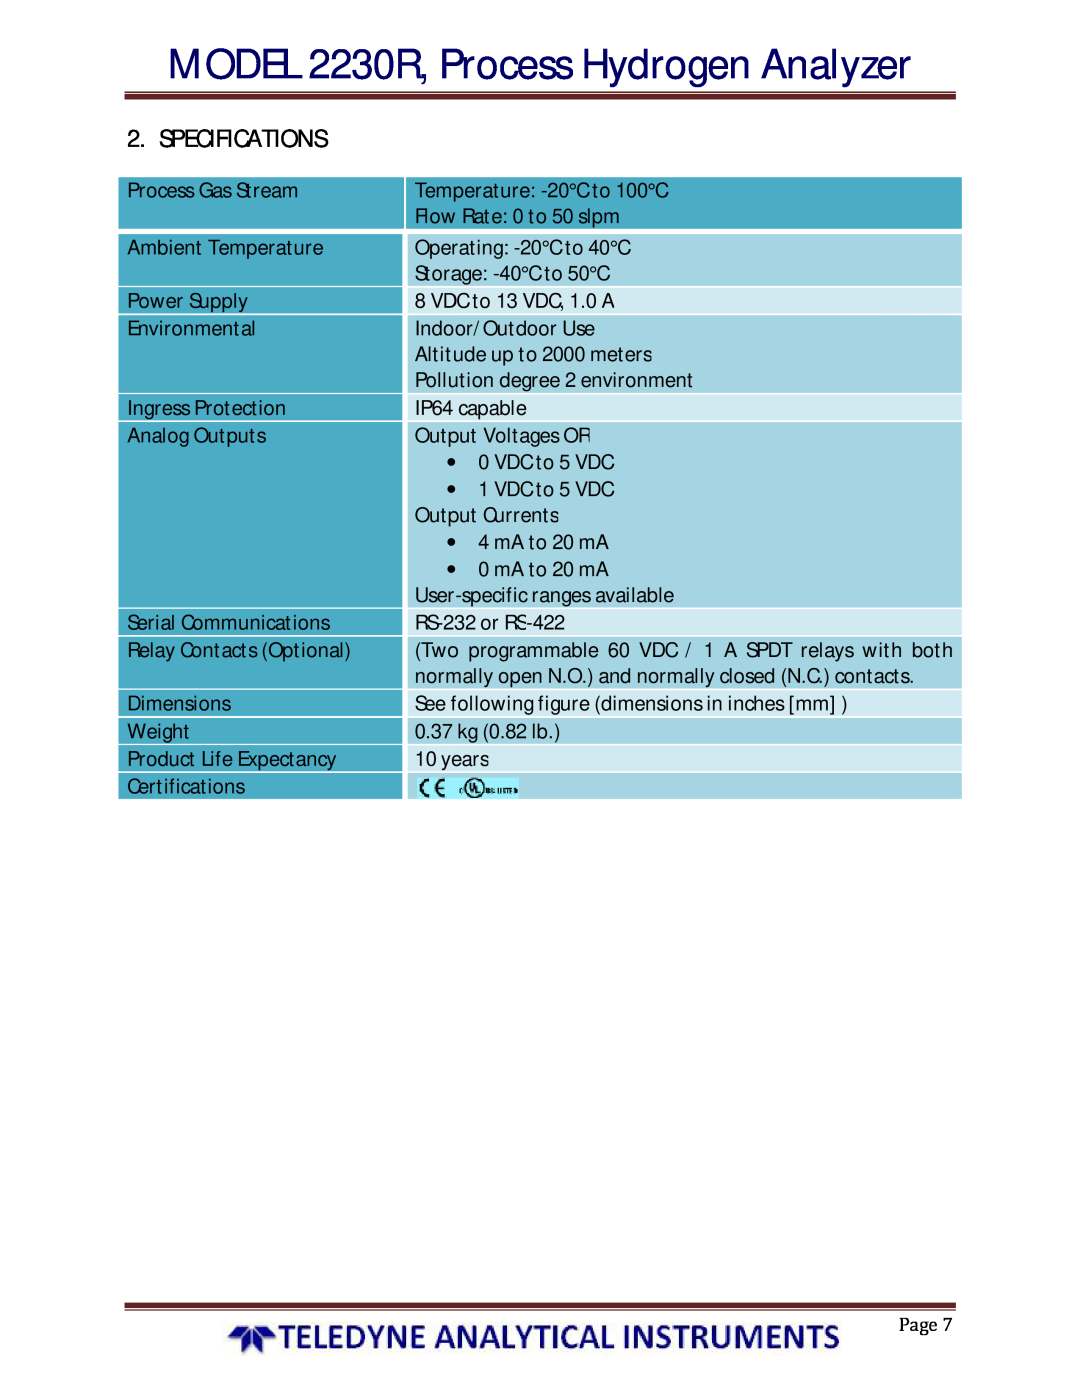 Teledyne instruction manual Specifications, MODEL 2230R, Process Hydrogen Analyzer 